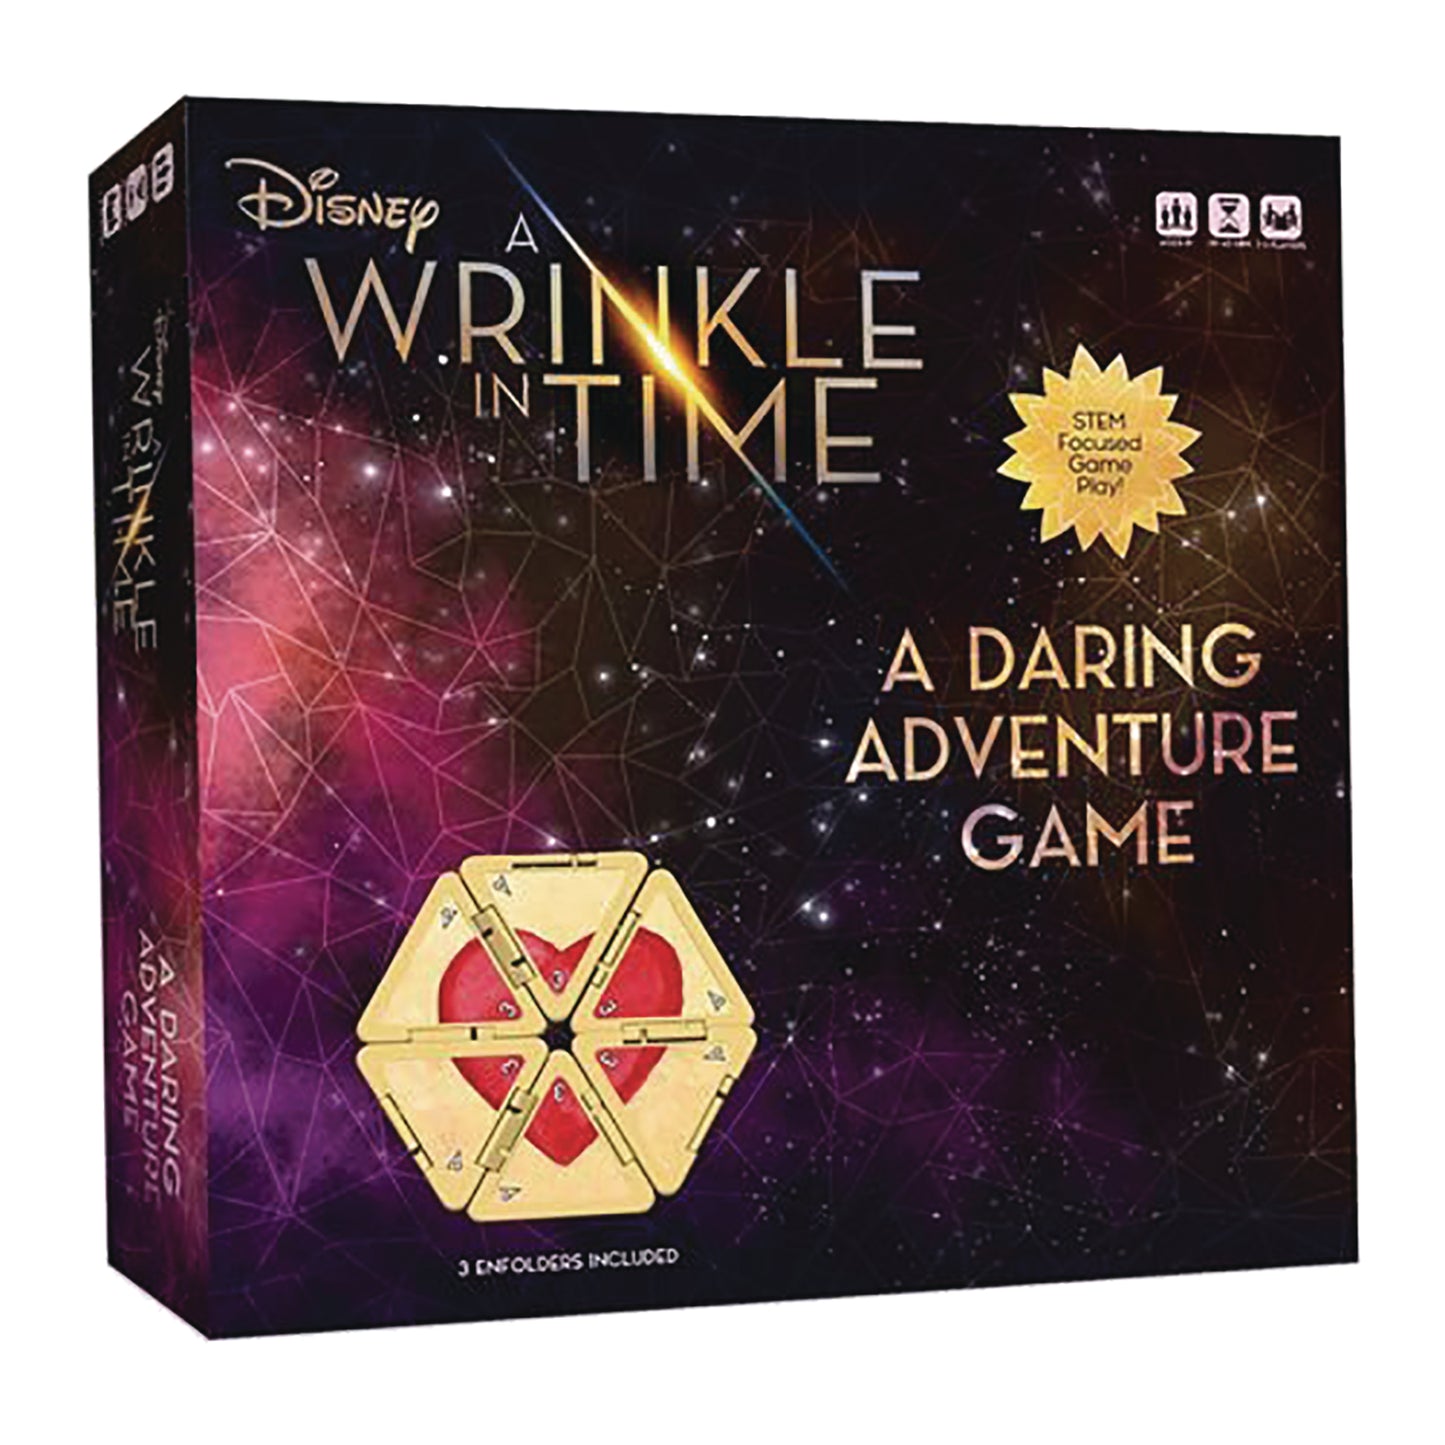 Disney A Wrinkle In Time Daring Adventure Game